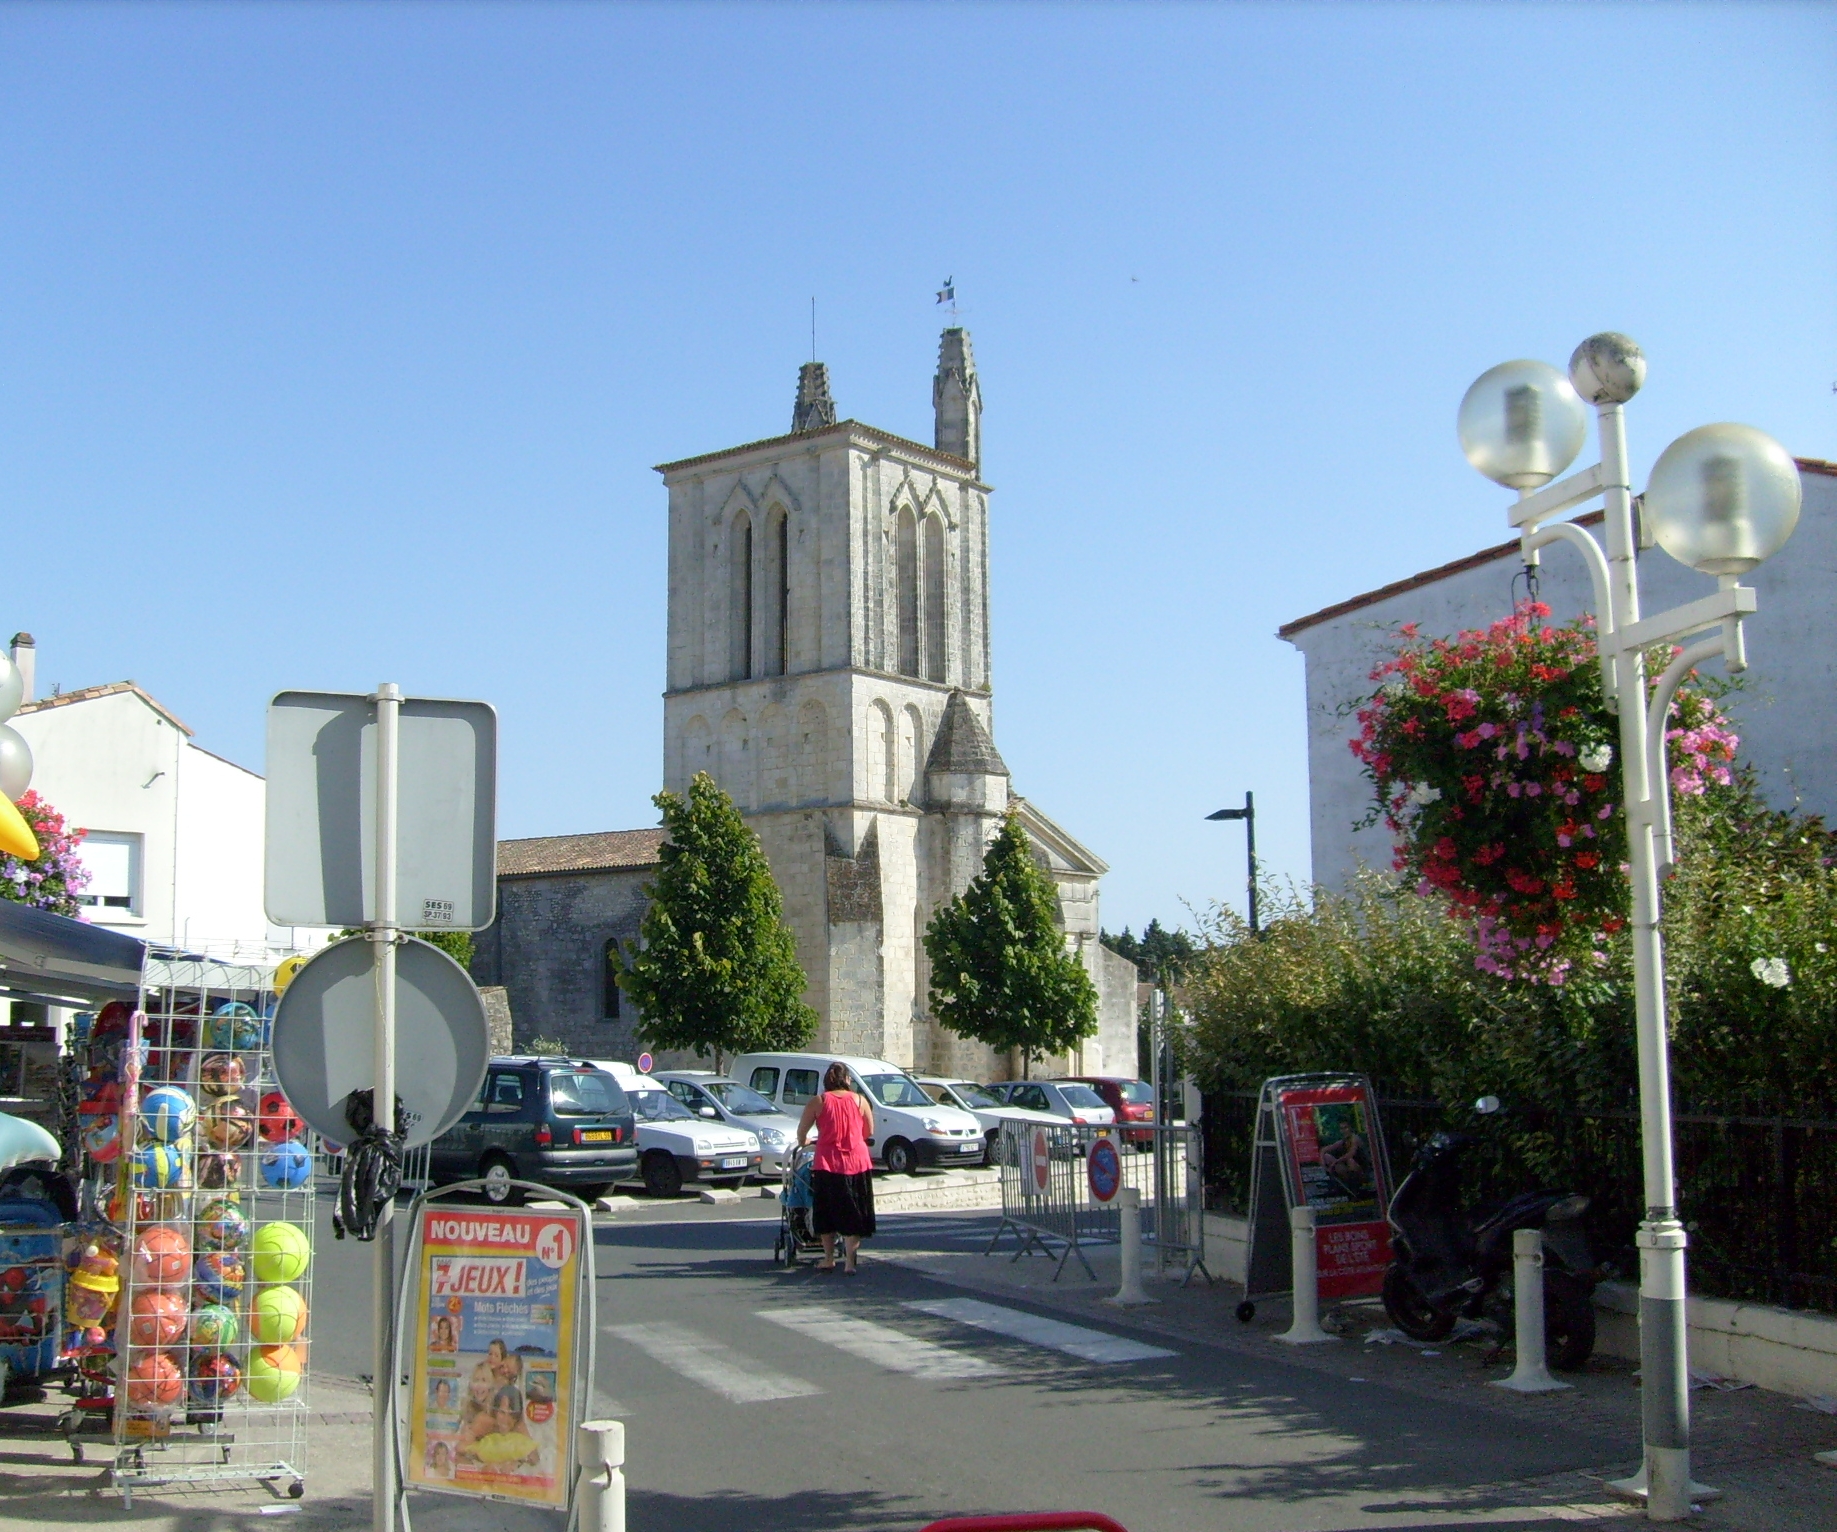 1. Introduction to Meschers Sur Gironde, Charente Maritime